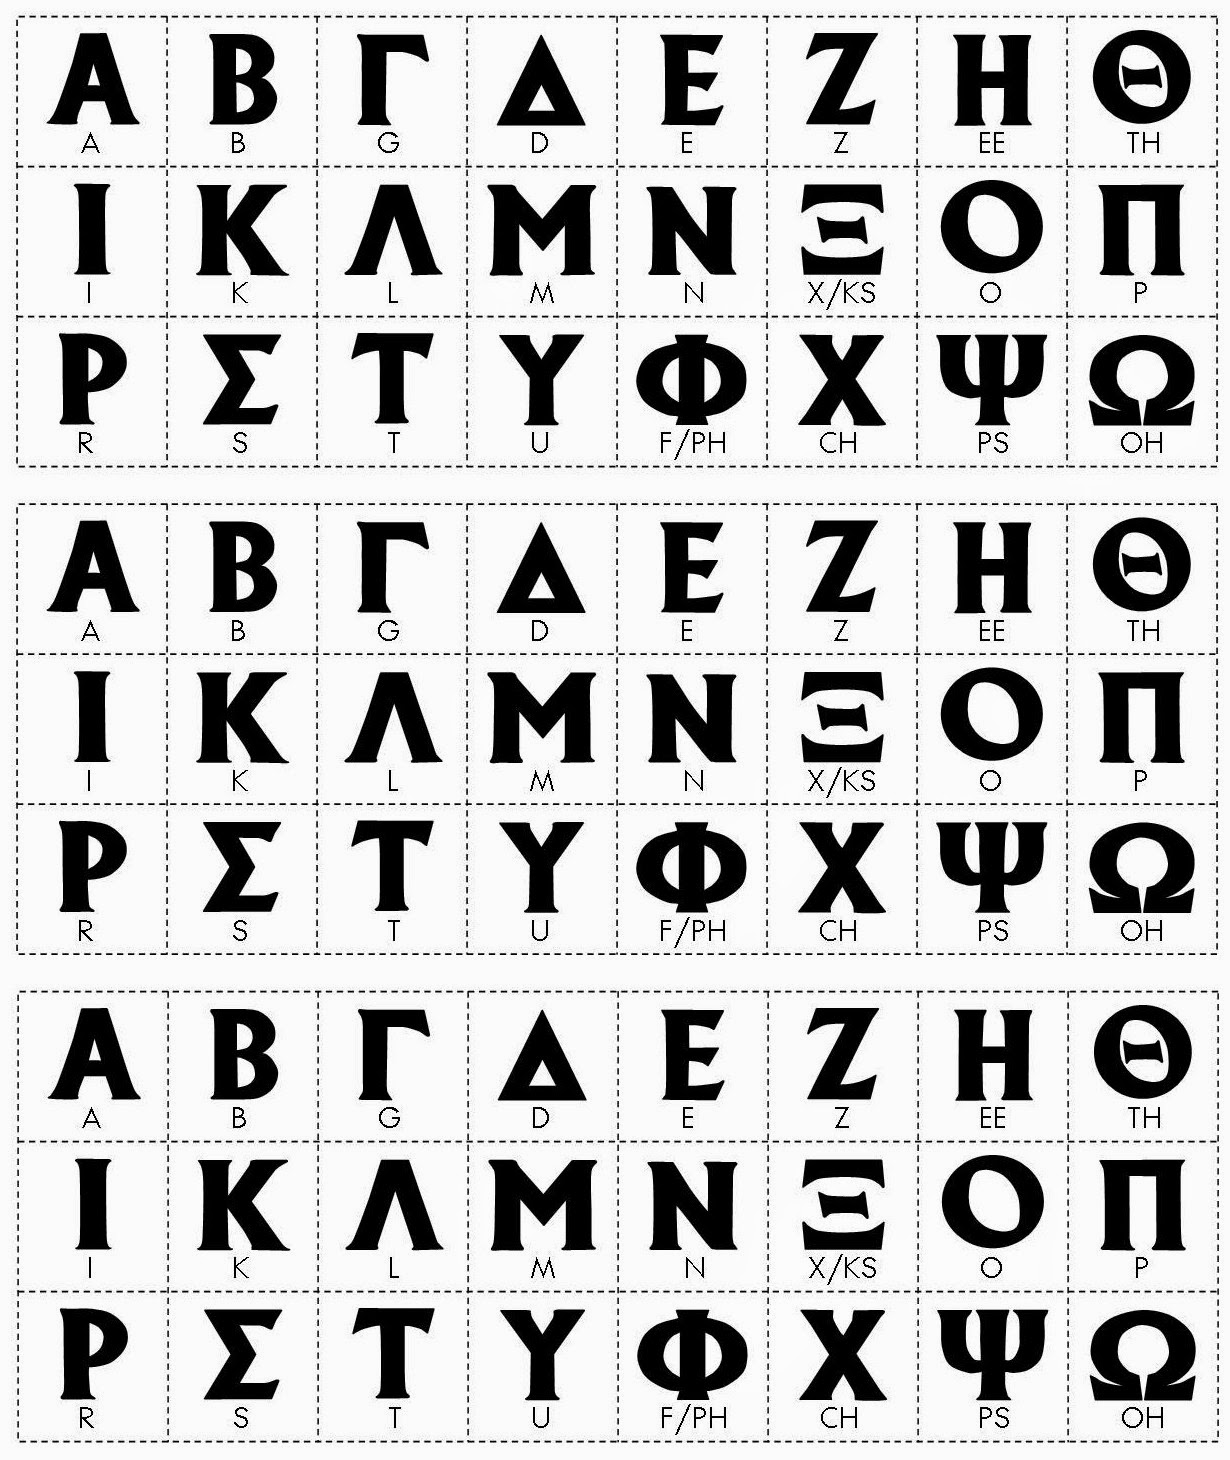 printable-greek-alphabet-printable-world-holiday